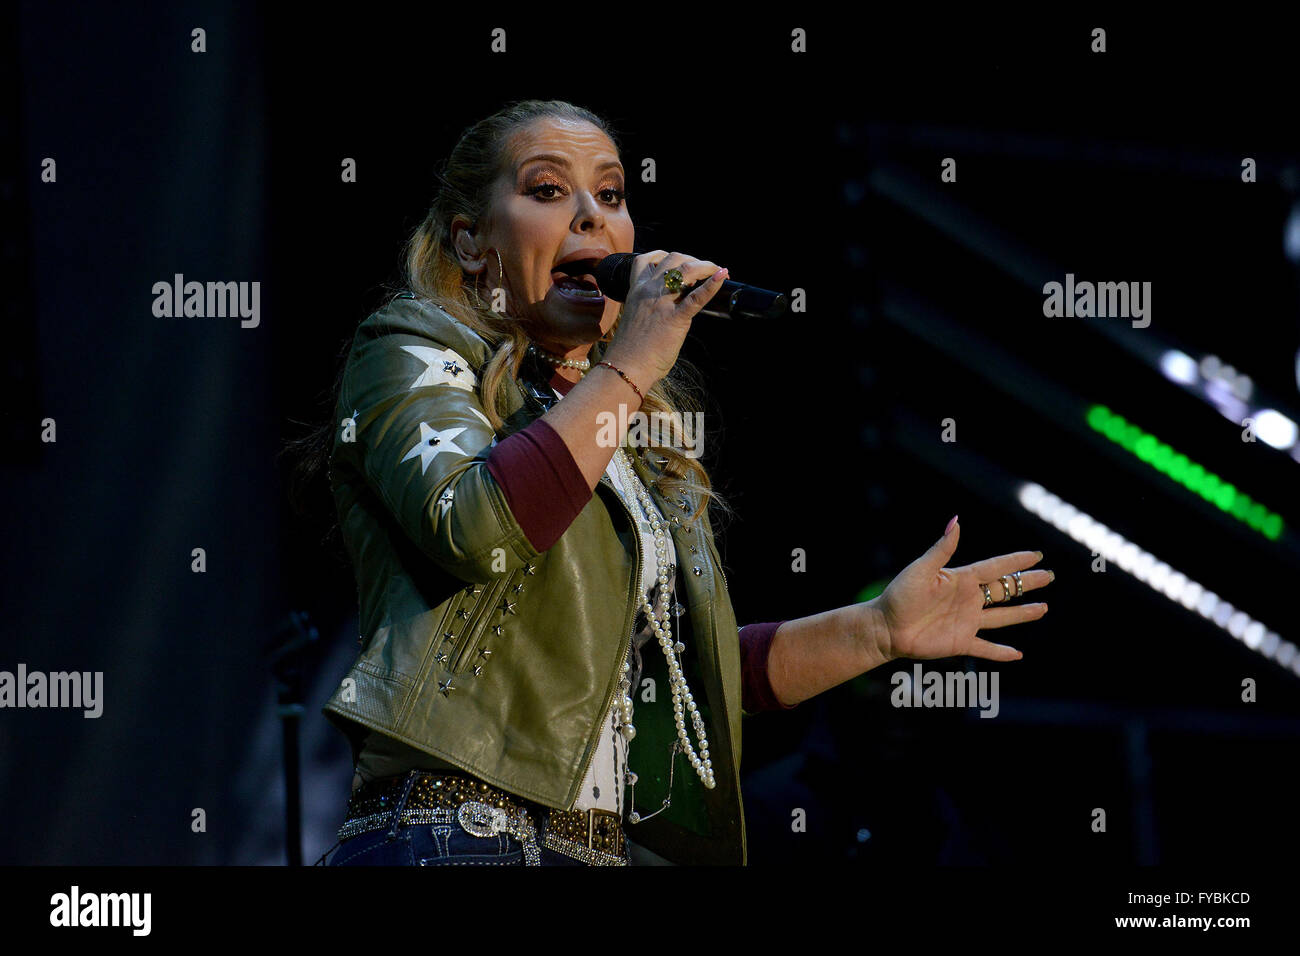 Anastacia live on stage on 18Apr2016 at Meistersingerhalle, Nuremburg, Bavaria, Germany The image shows U.S. singer and songwriter Anastacia, full name is Anastacia Lyn Newkirk. Stock Photo